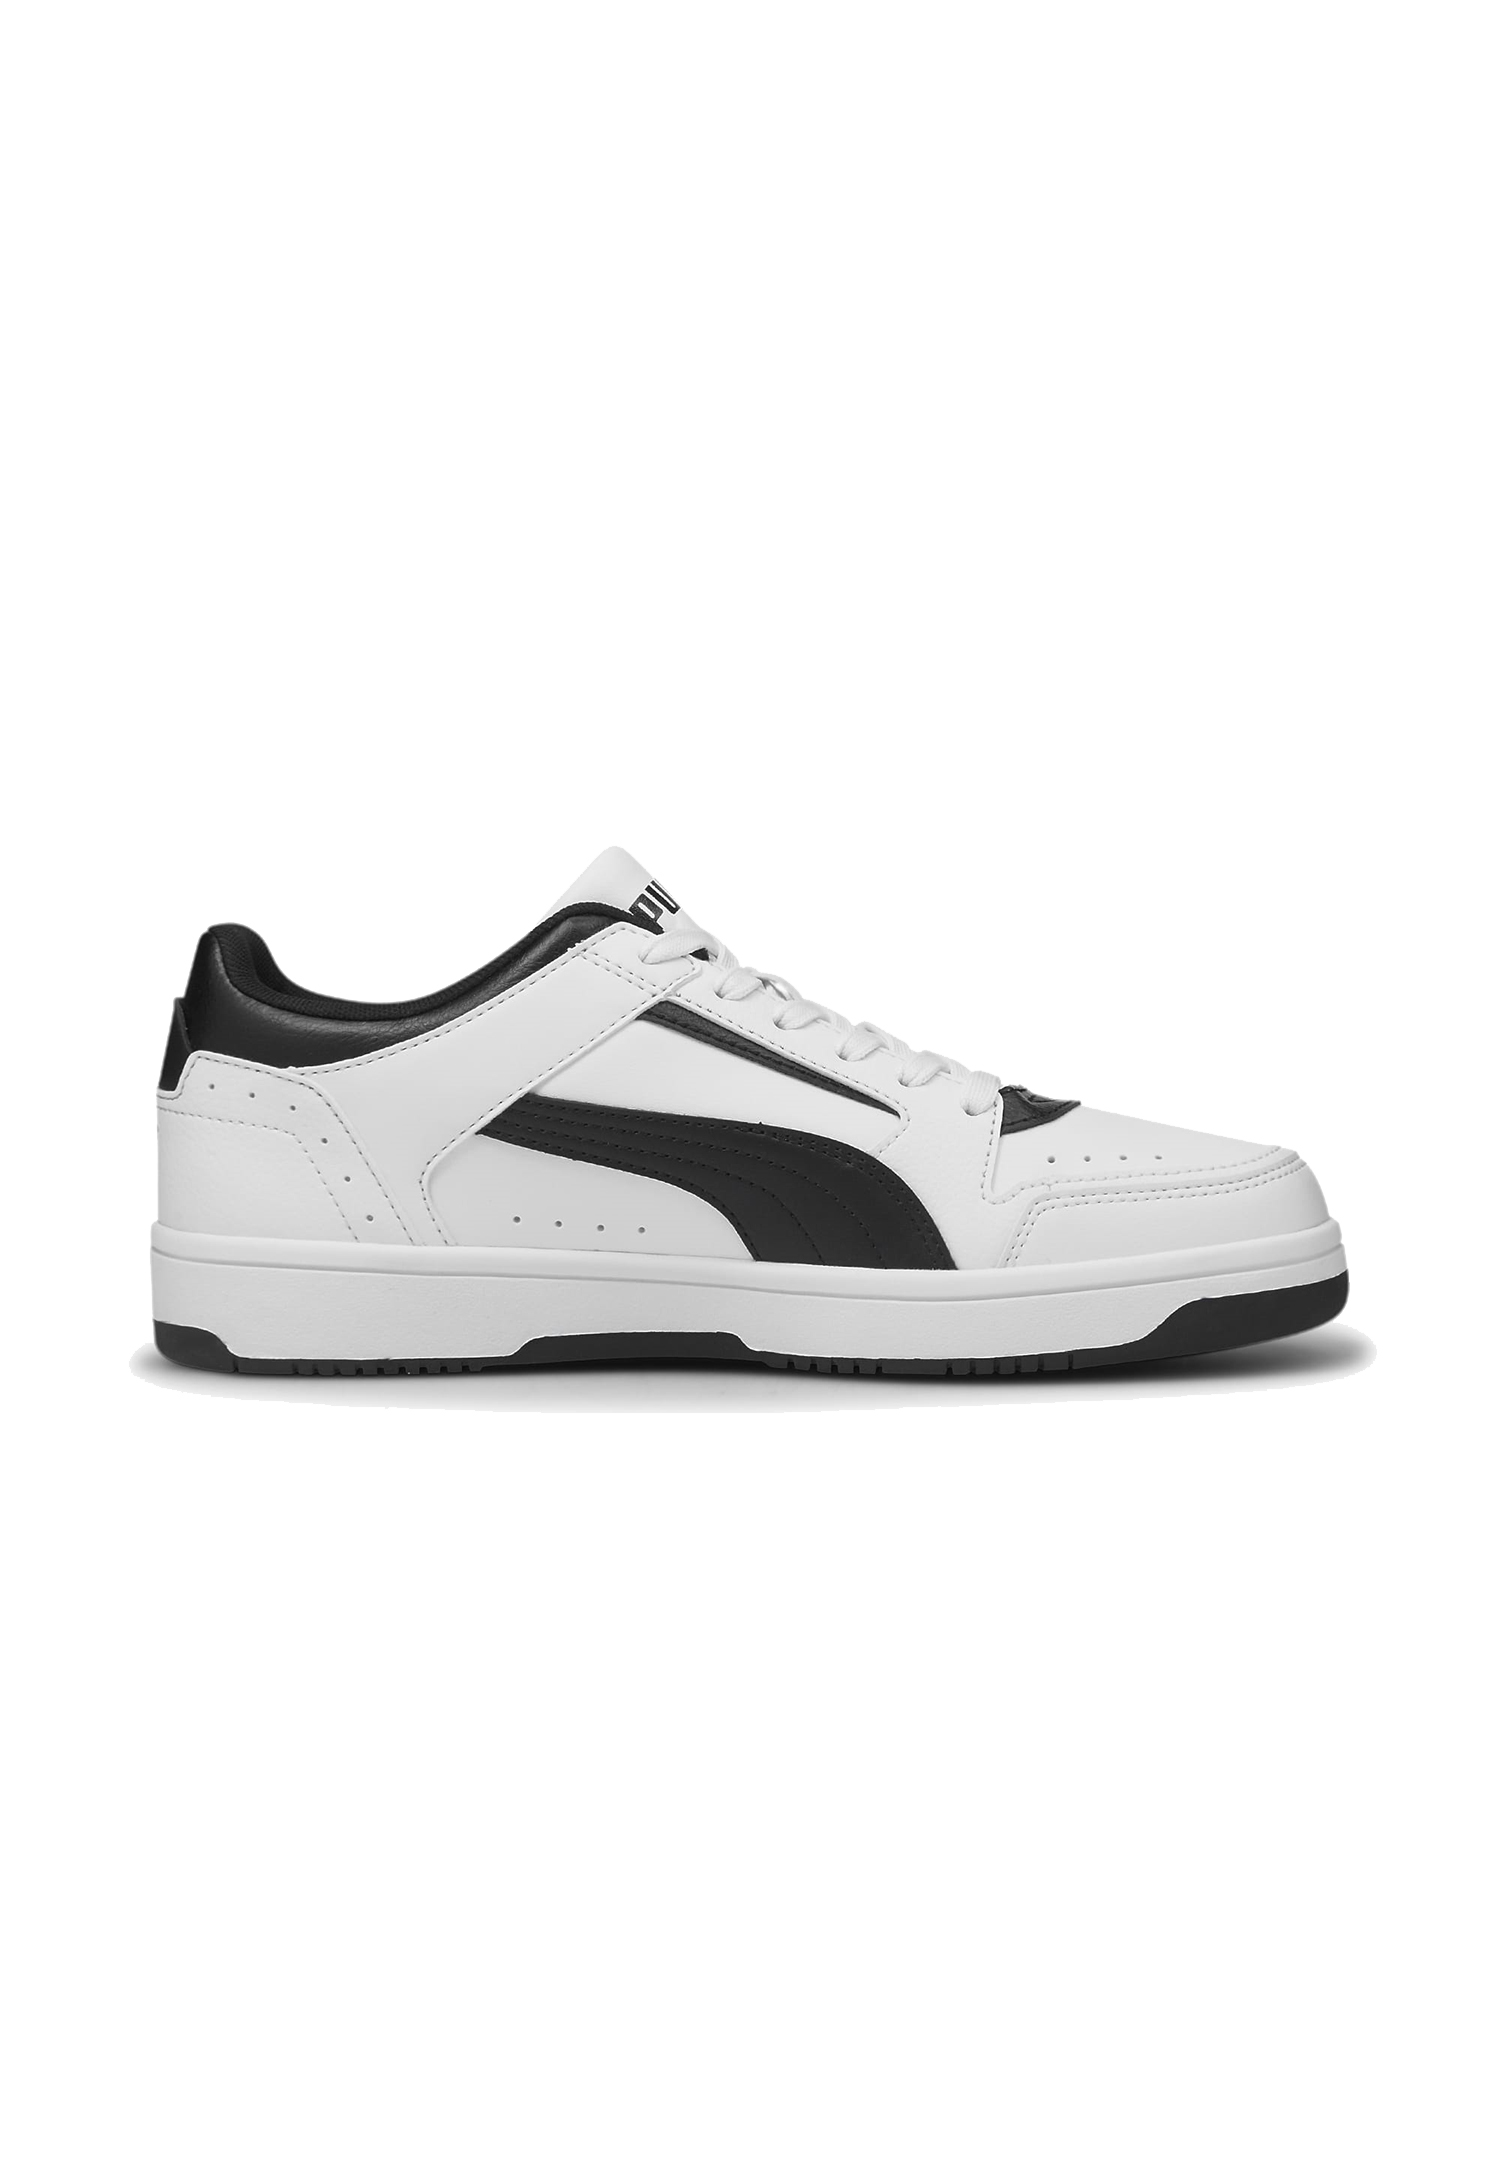 Puma Rebound JOY Low Top Herren Sneaker Sportschuh 380747 weiss/schwarz